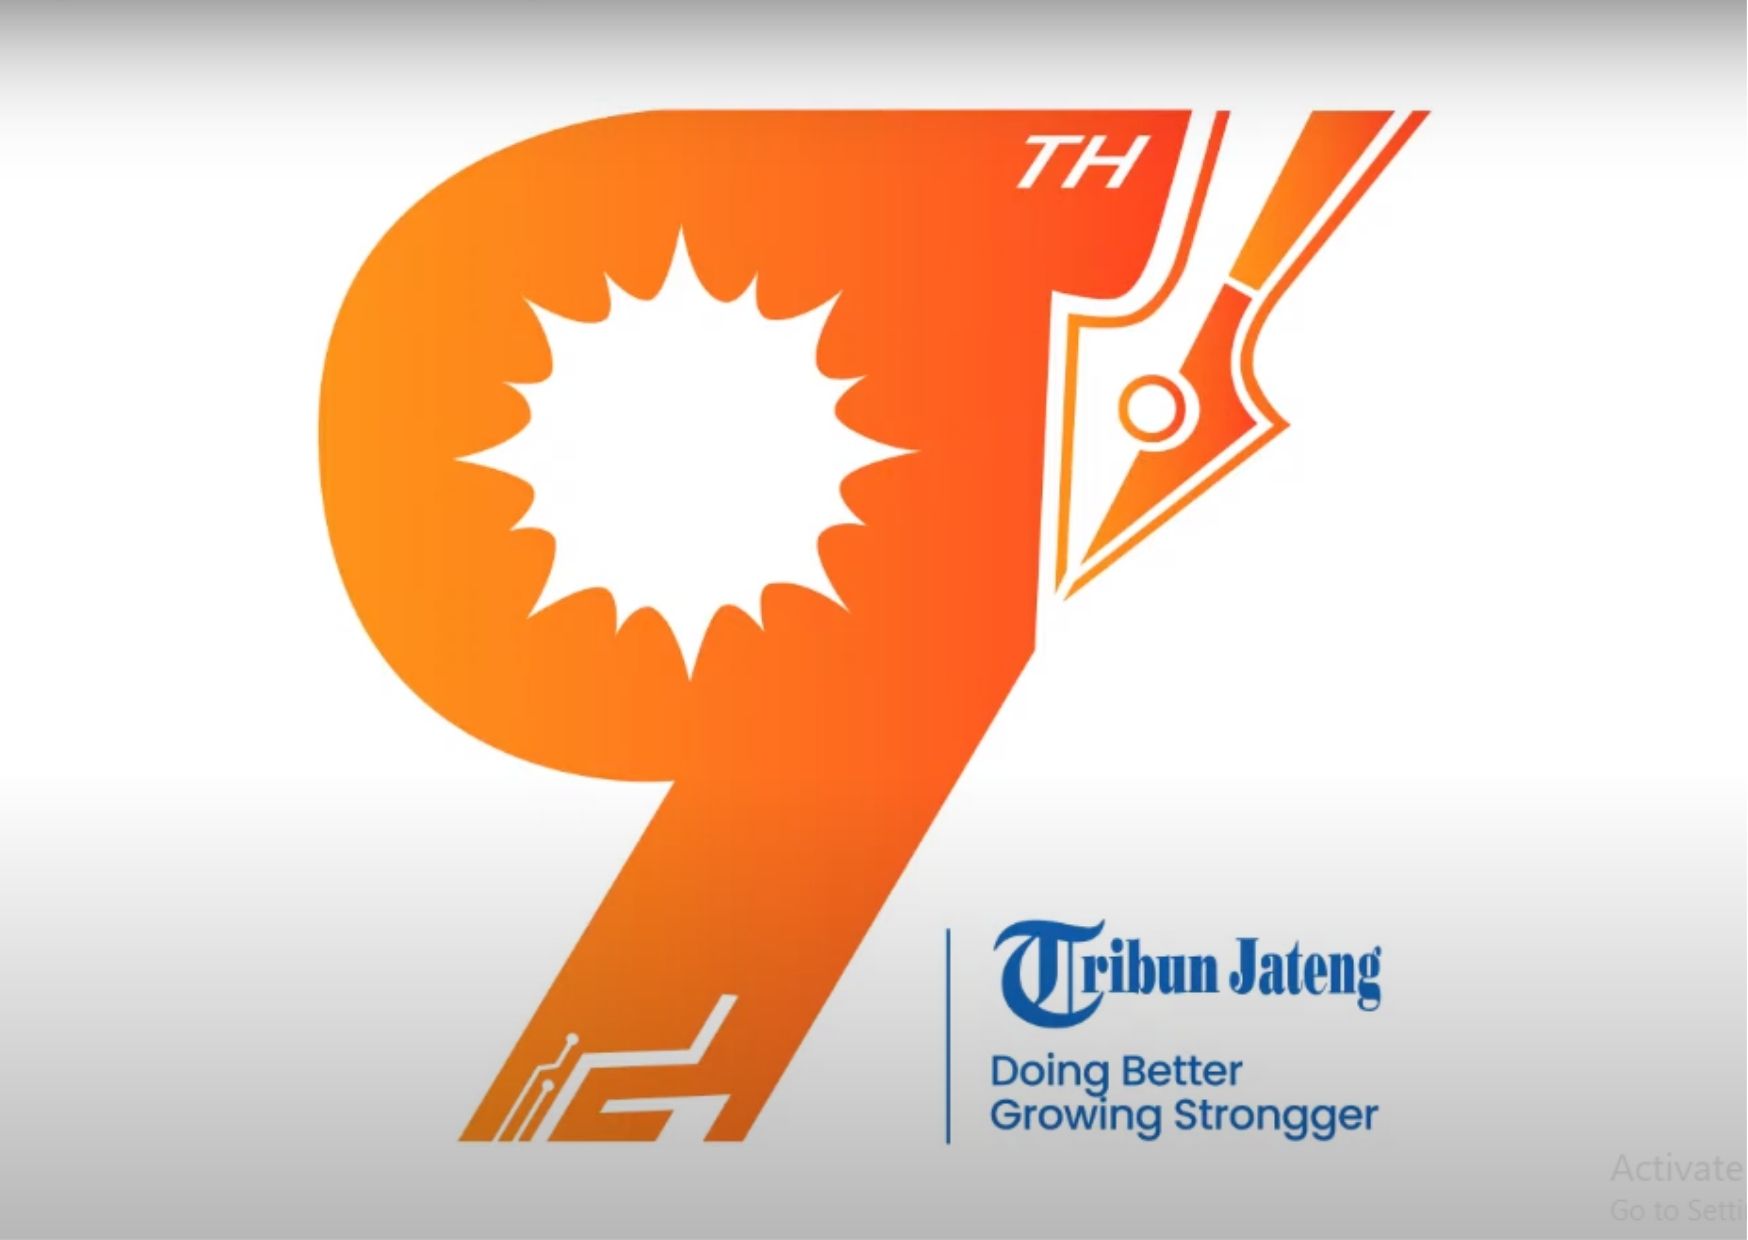 Tribun Jateng 9 Anniversary, Doing Better Growing Stronger